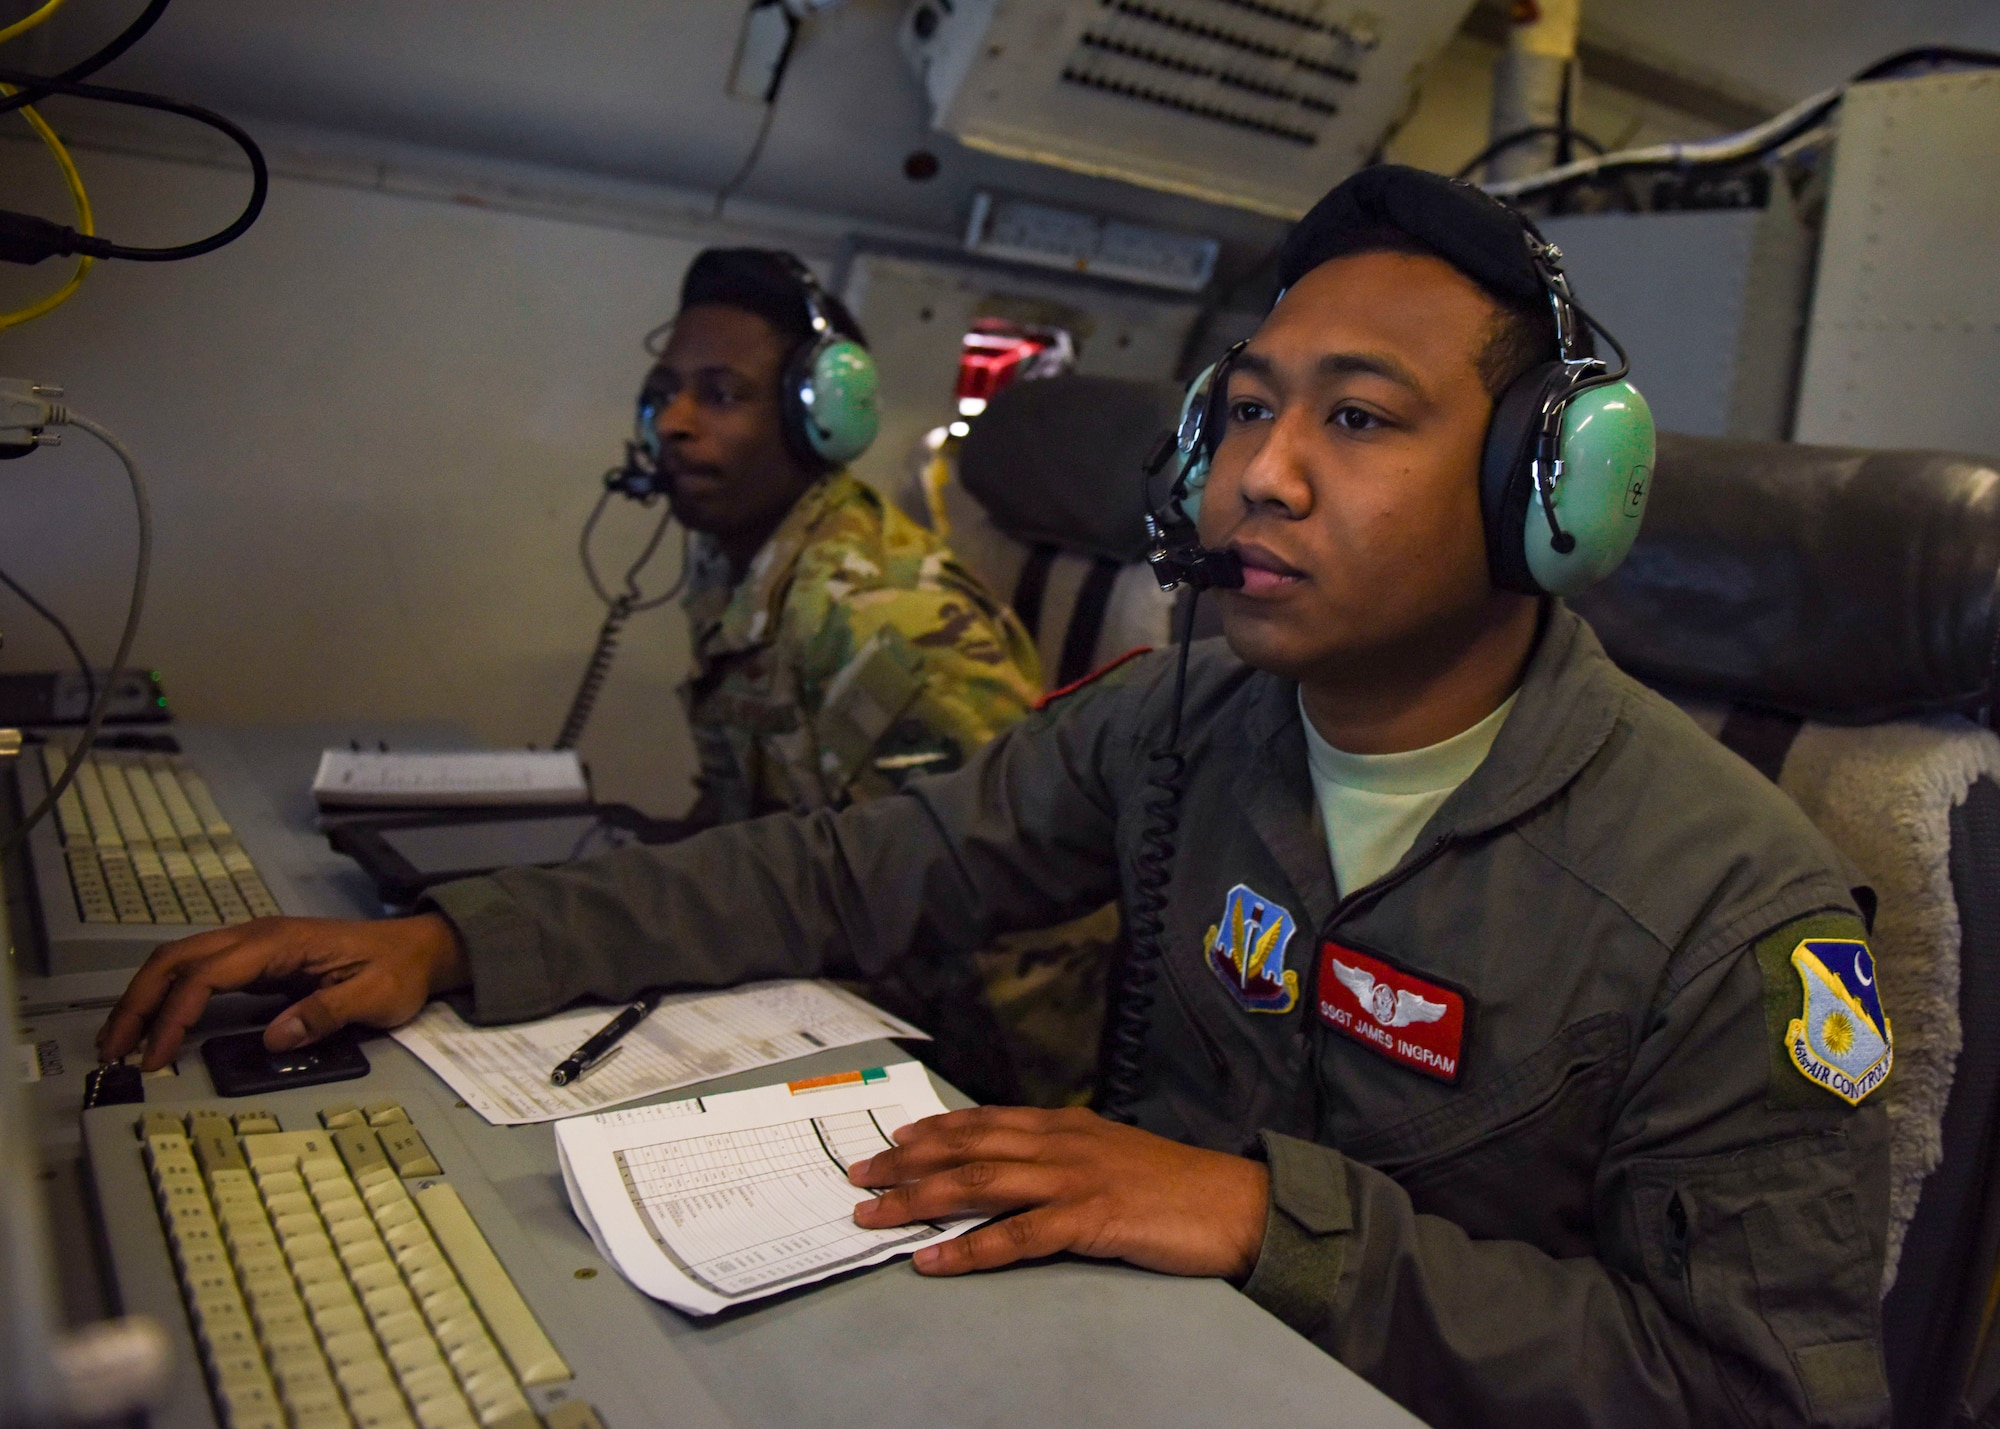 Two Airmen review radar imagery.